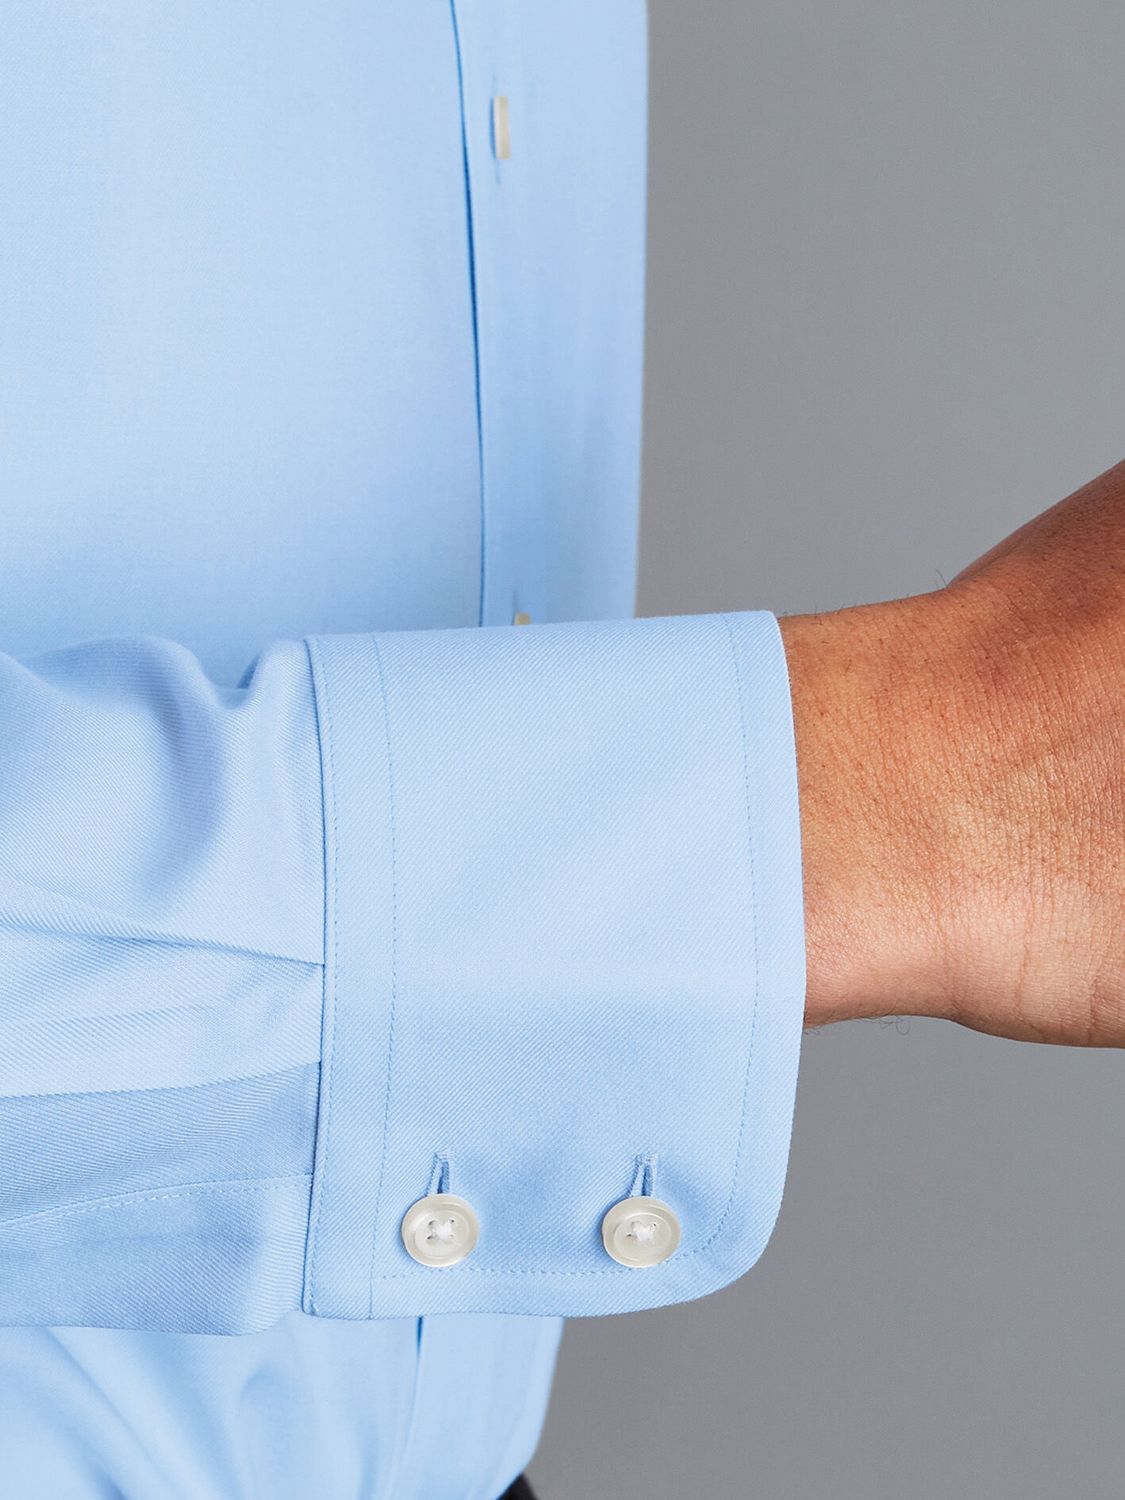 Charles Tyrwhitt Classic Collar Non-Iron Twill Slim Fit Shirt, Sky Blue ...